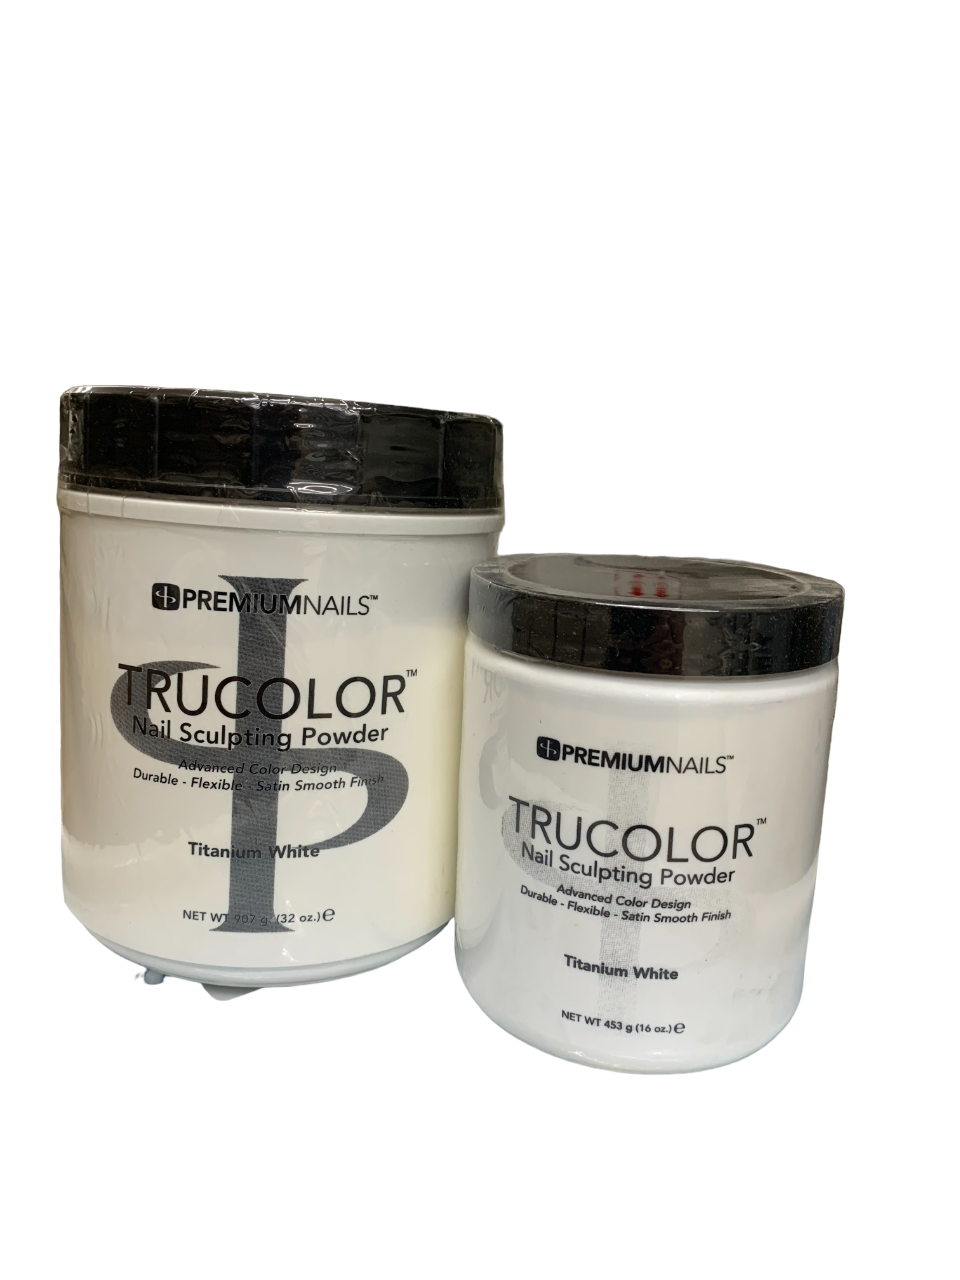 Premiumnails Trucolor Acrylic Powder - TCTW - Titanium White